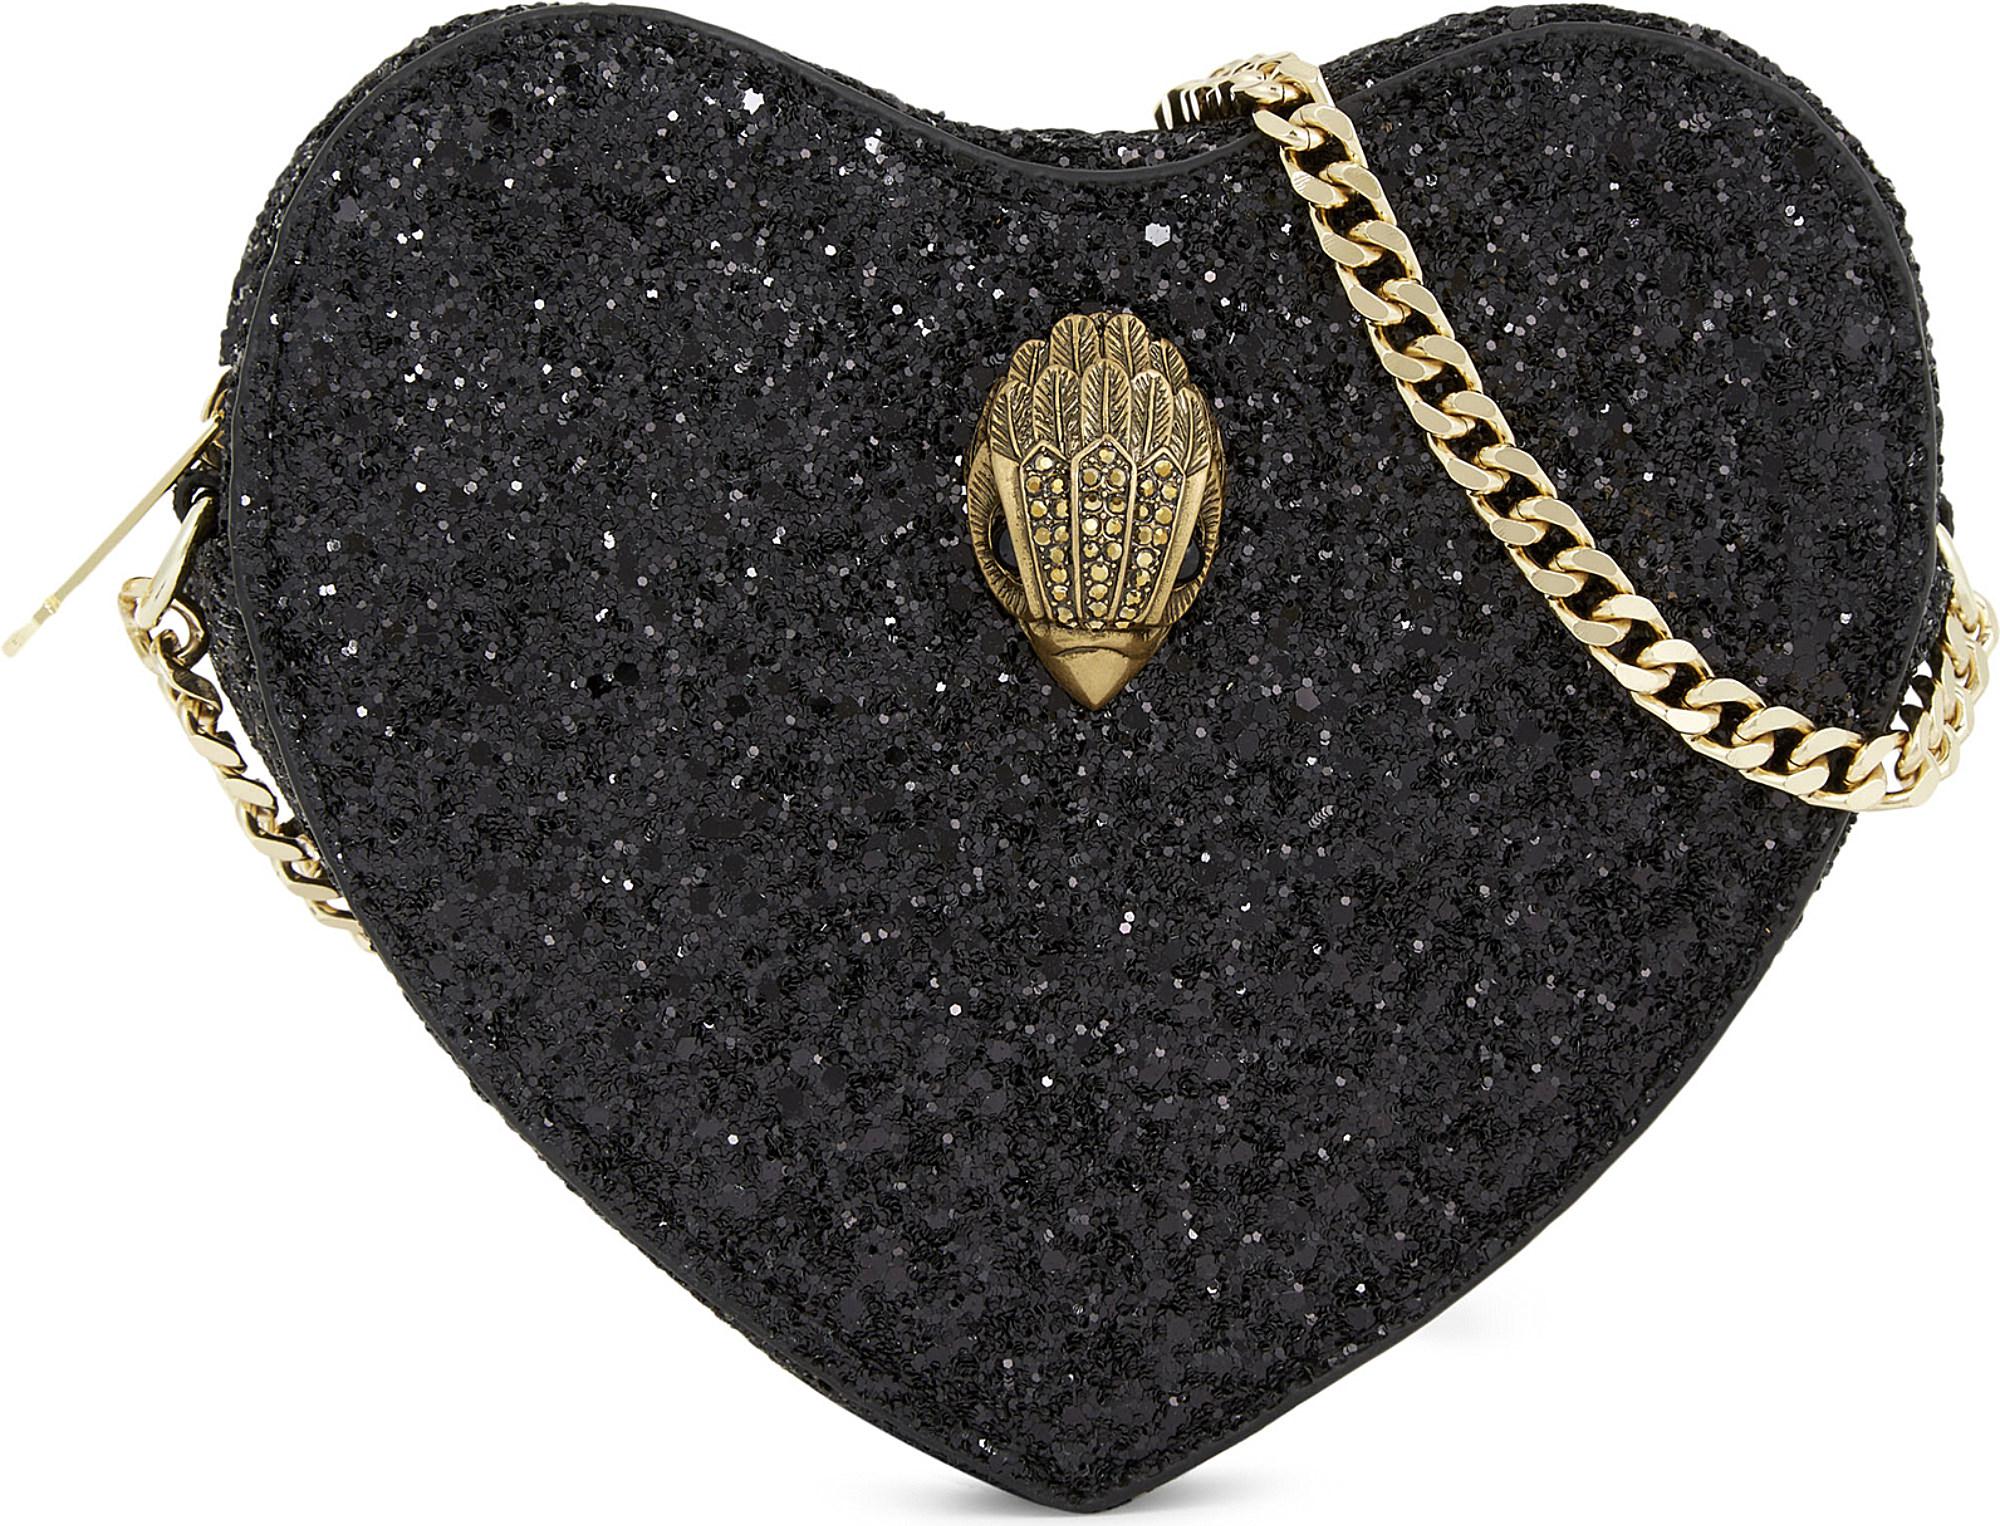 Kurt Geiger London Kensington Heart Crossbody Bag in Black